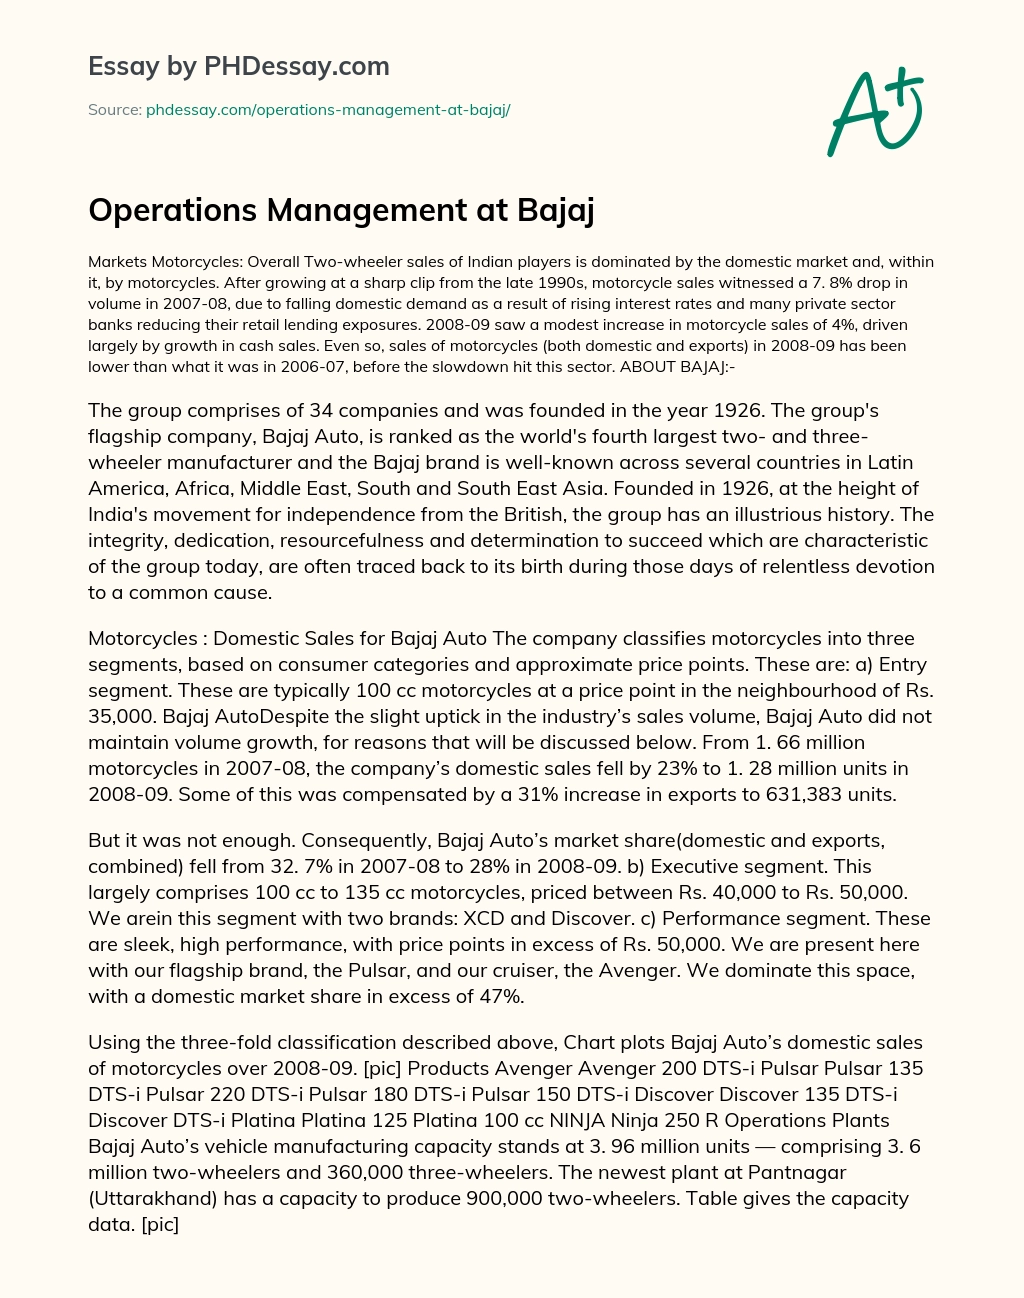 Operations Management at Bajaj essay